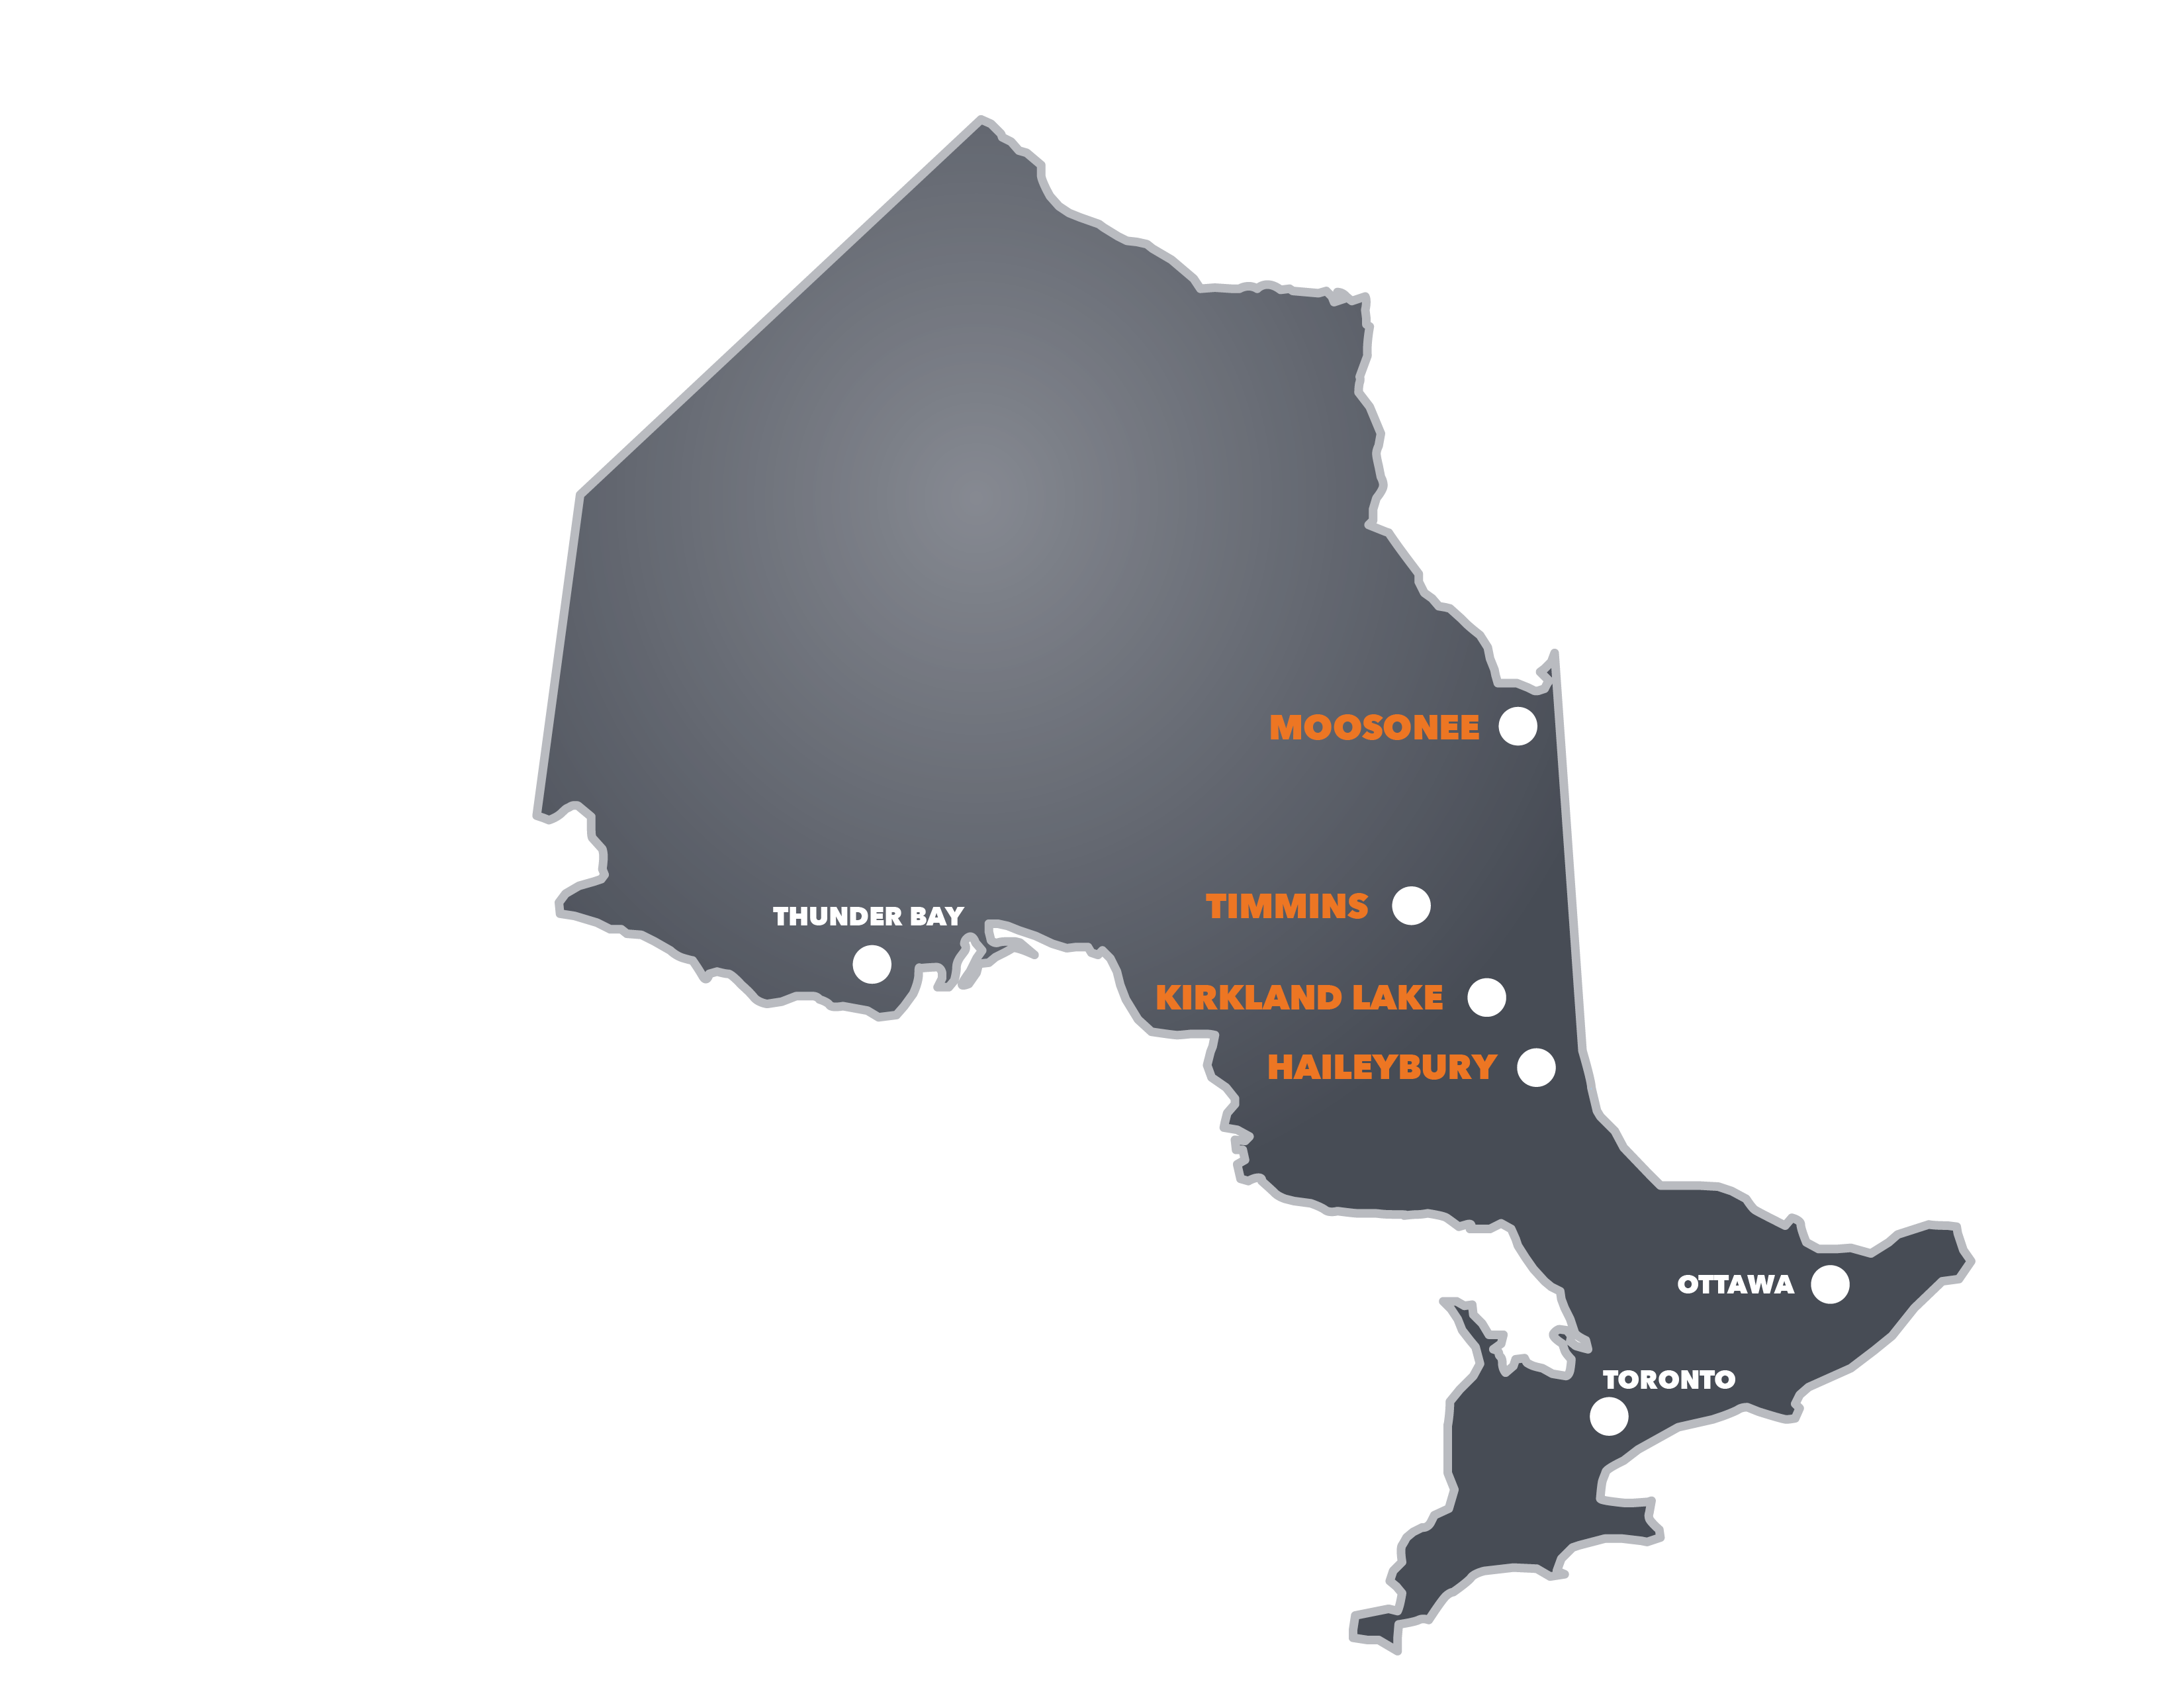 Campus Locations Map of Ontario